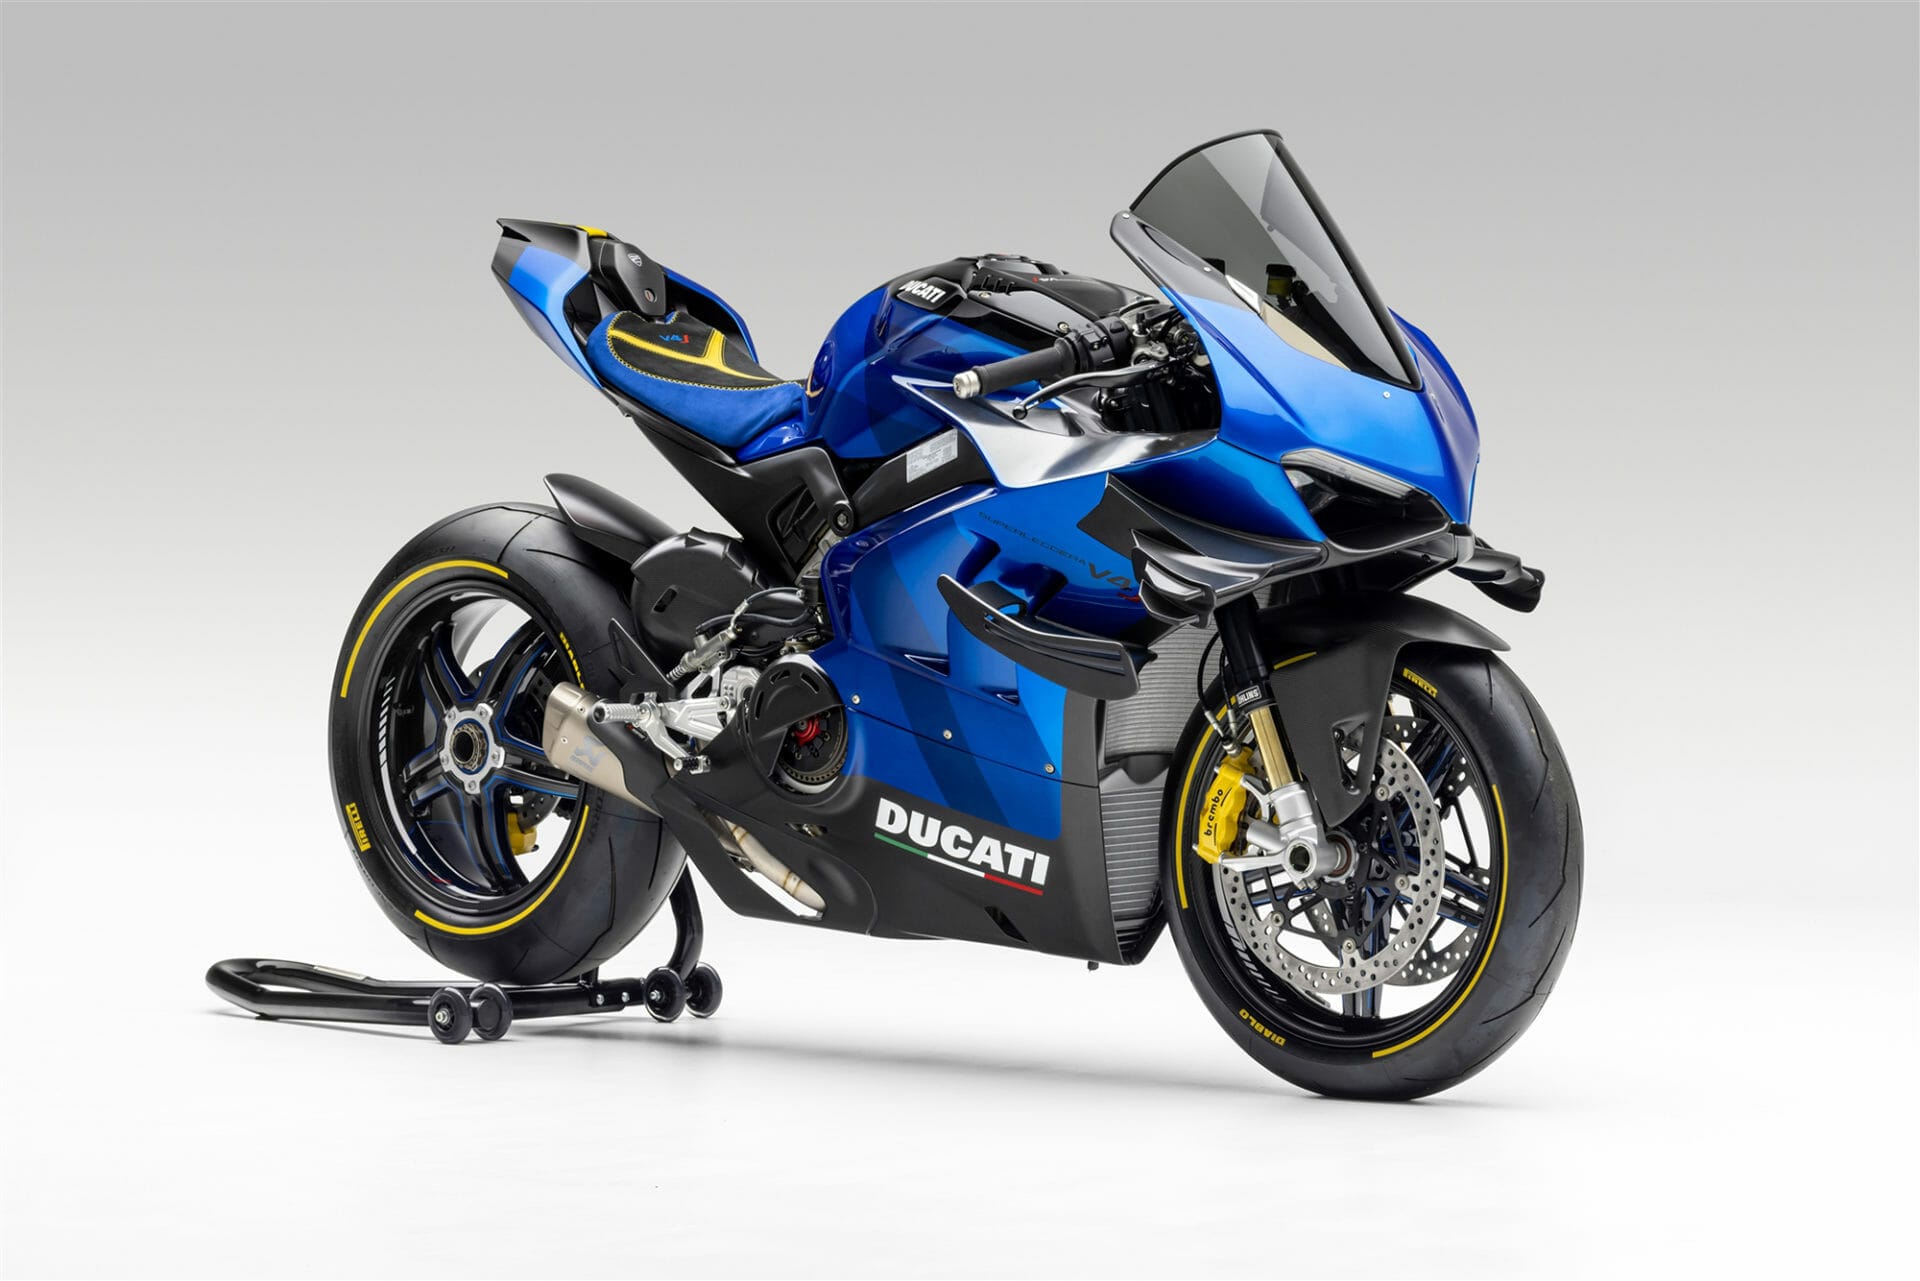 Ducati Unica Program - Unique Ducatis
- also in the MOTORCYCLES.NEWS APP